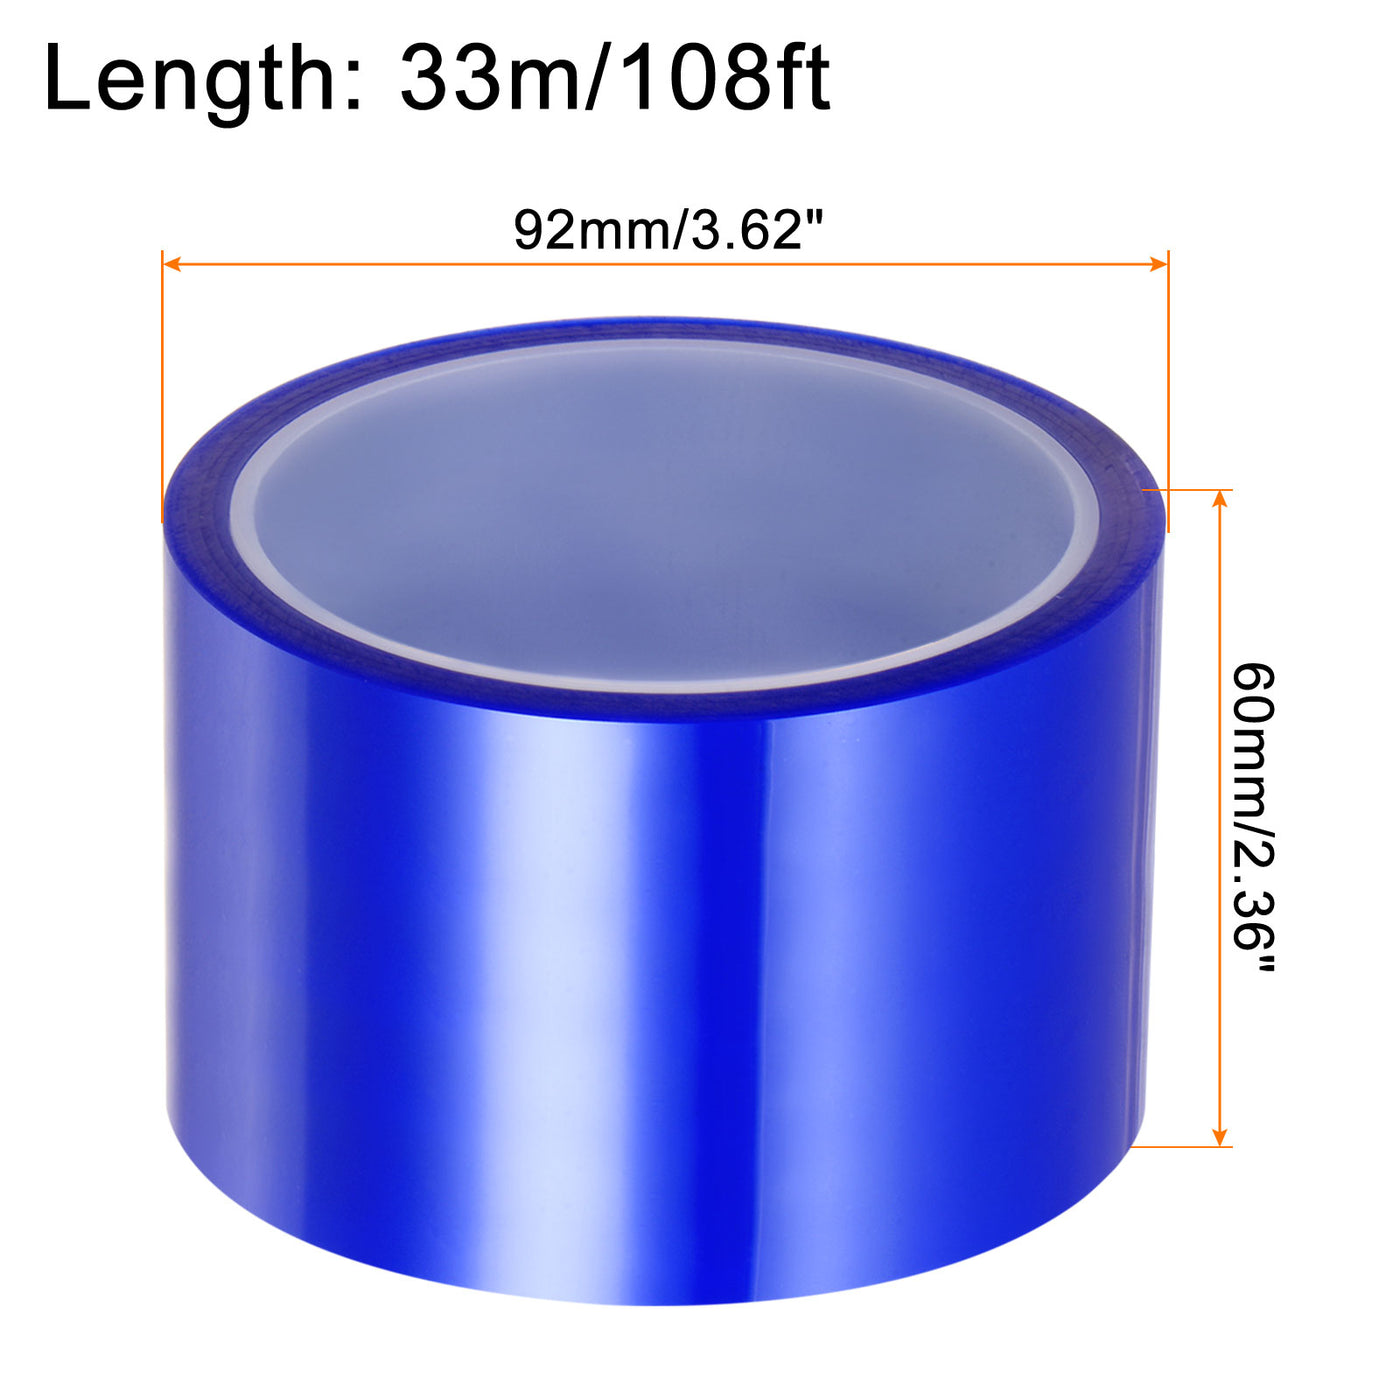 Harfington 2 Rolls Heat Tape High Temperature 60mmx33m(108ft) Sublimation Tape Blue